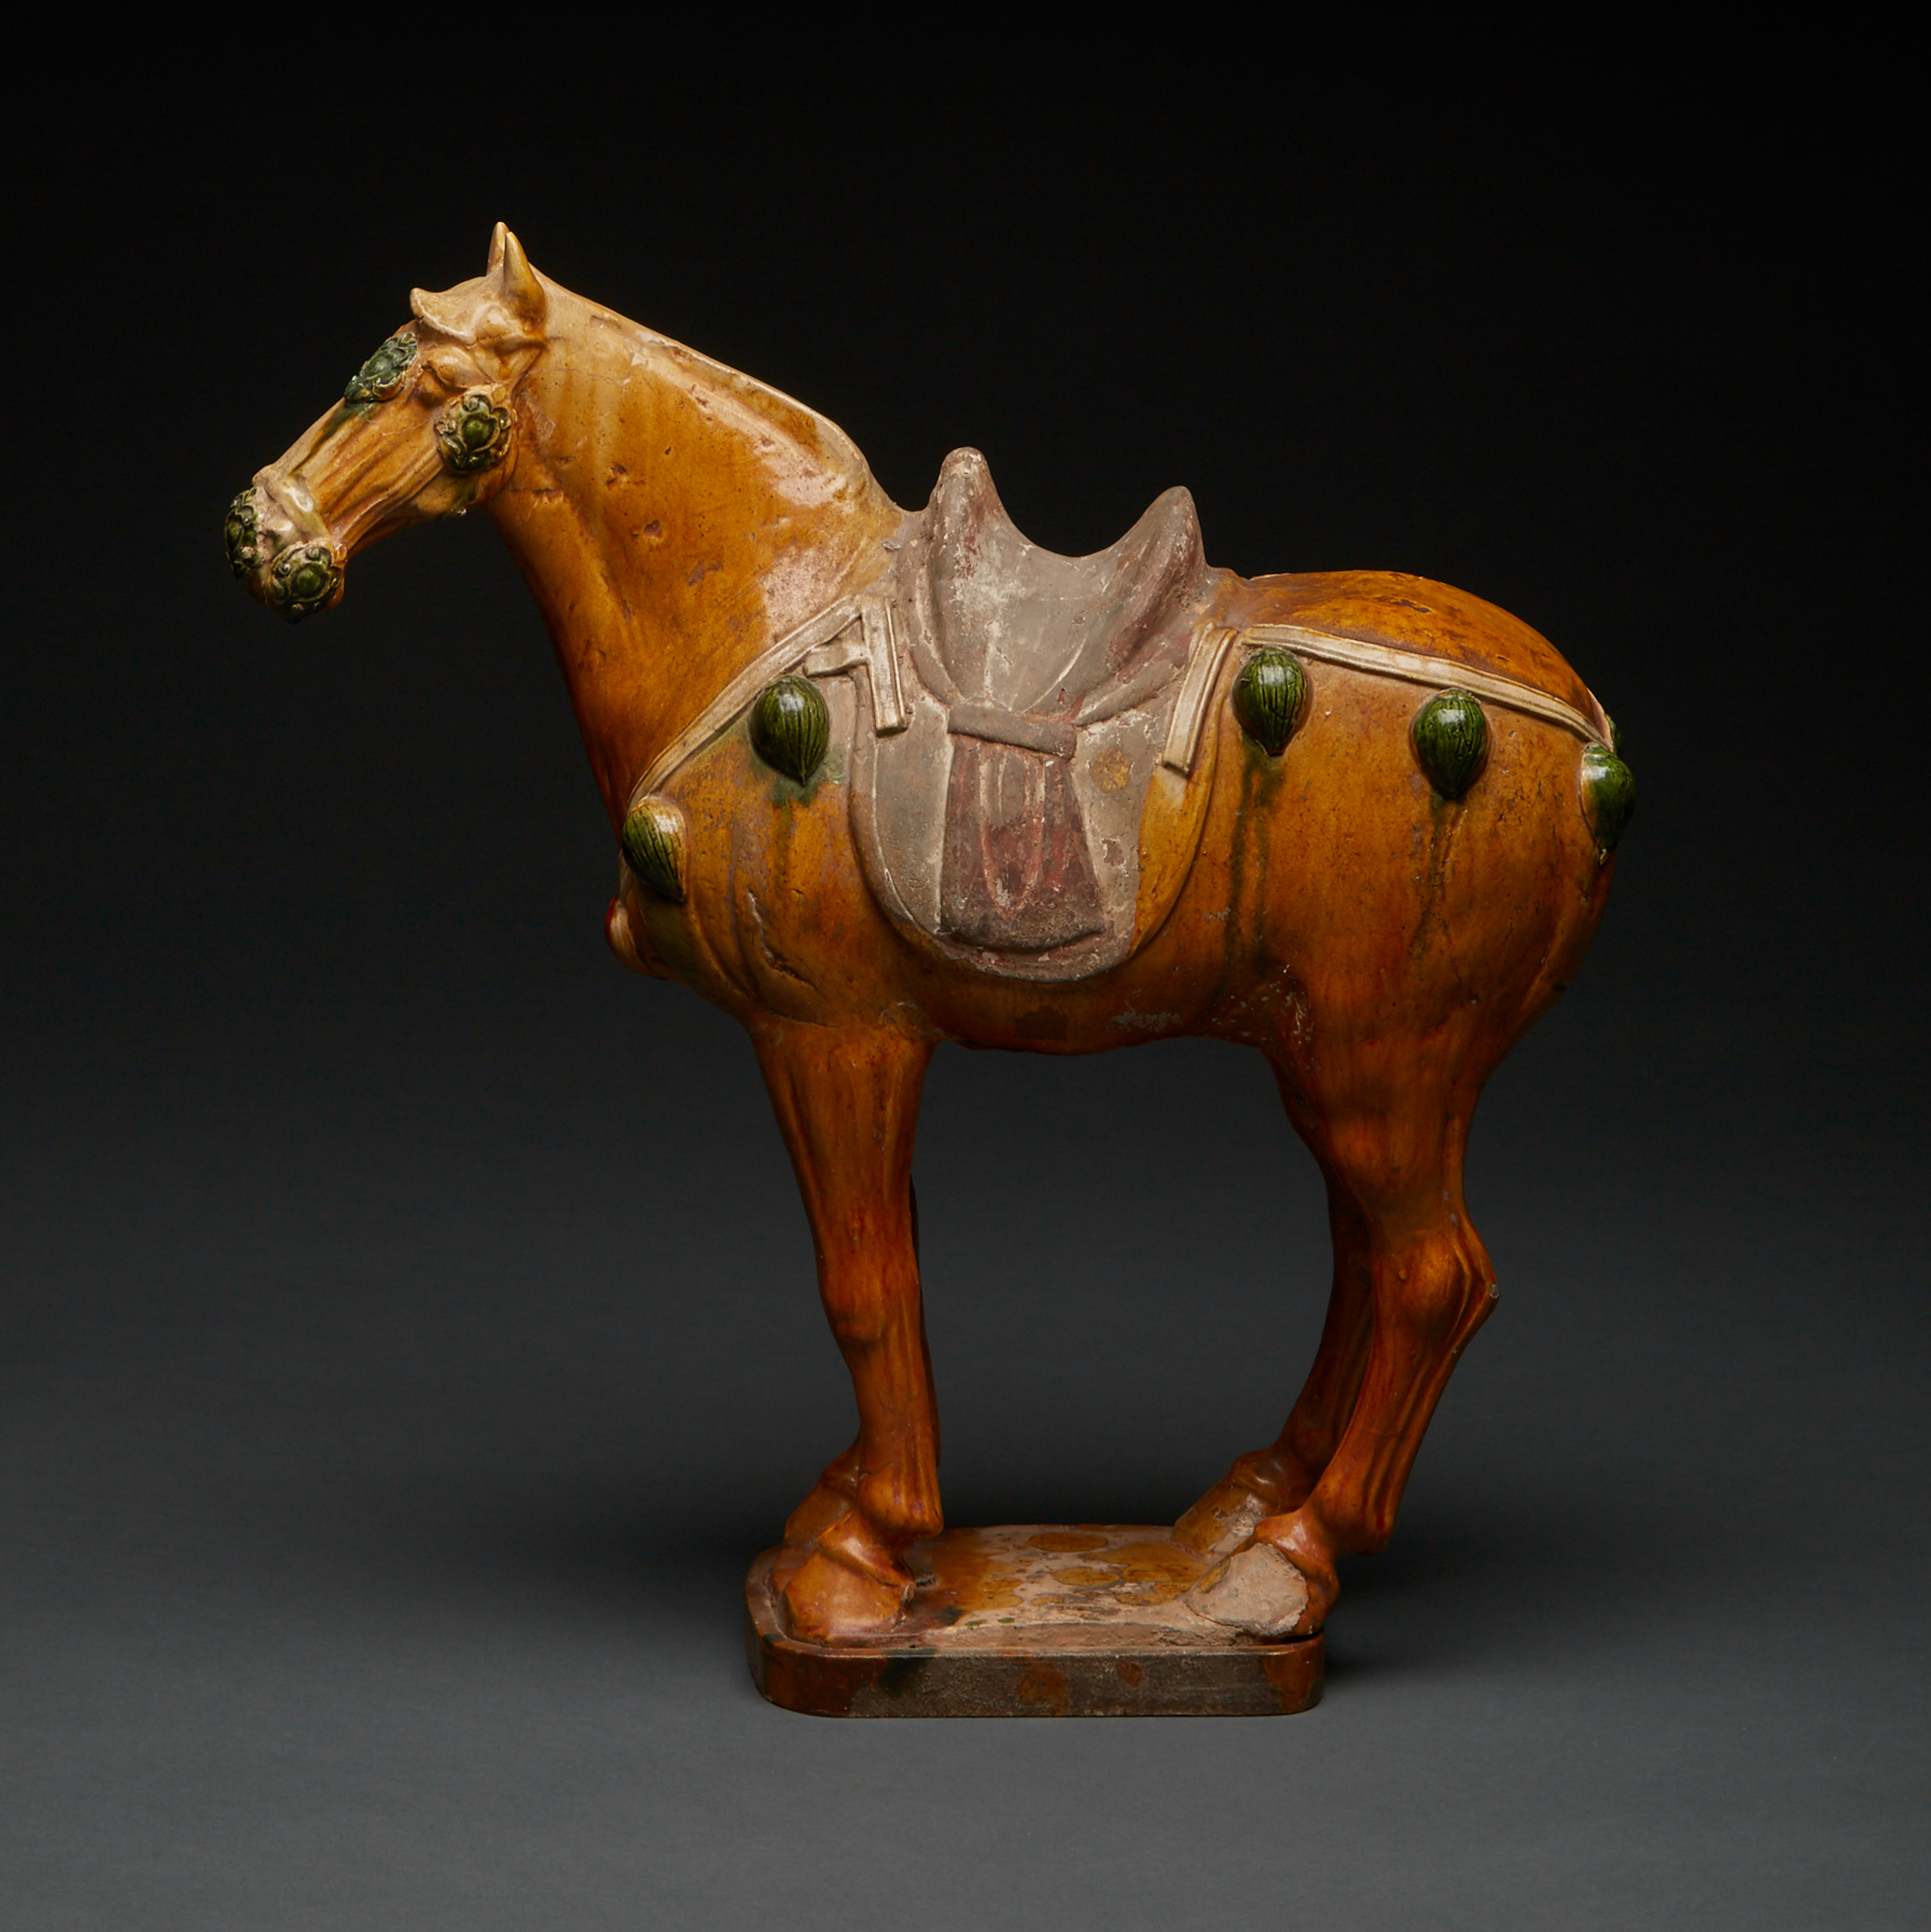 A Large Sancai-Glazed Pottery Figure of a Horse, Tang Dynasty